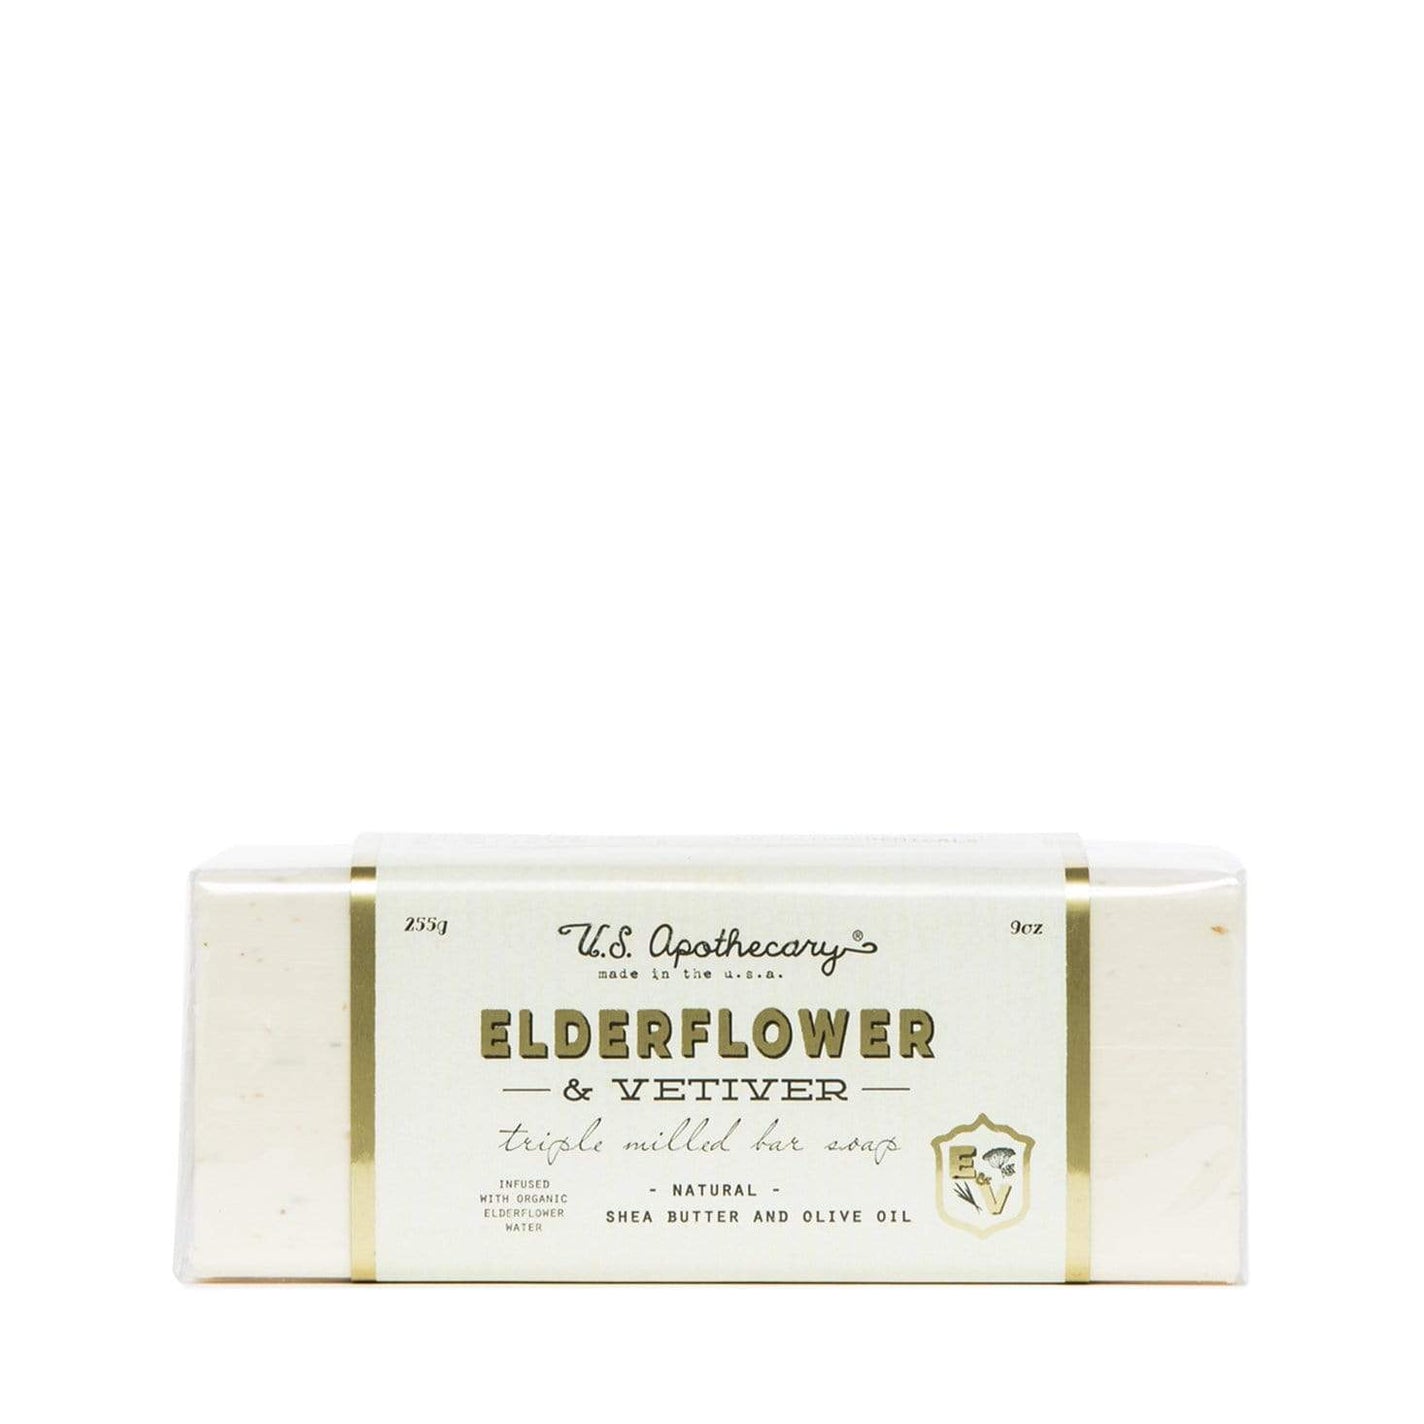 U.S. Apothecary Elderflower Soap